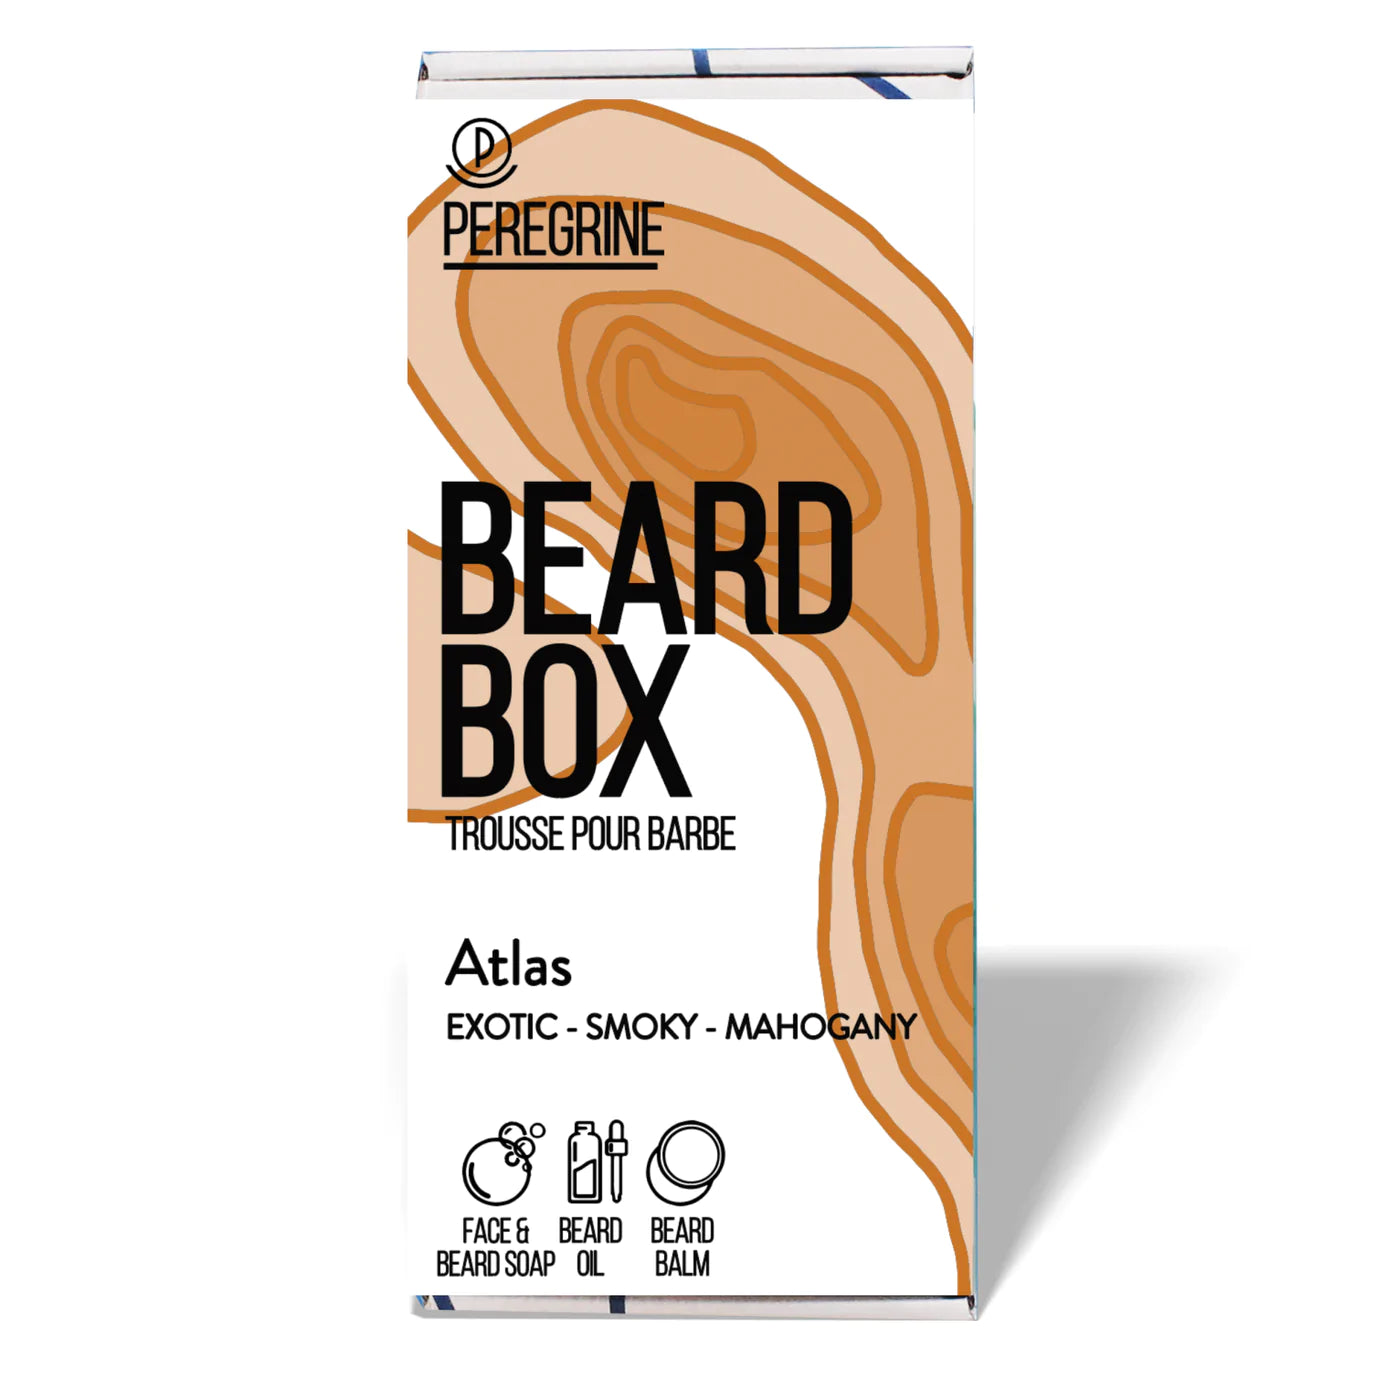 Peregrine Supply Co. Atlas Beard Box Care Package